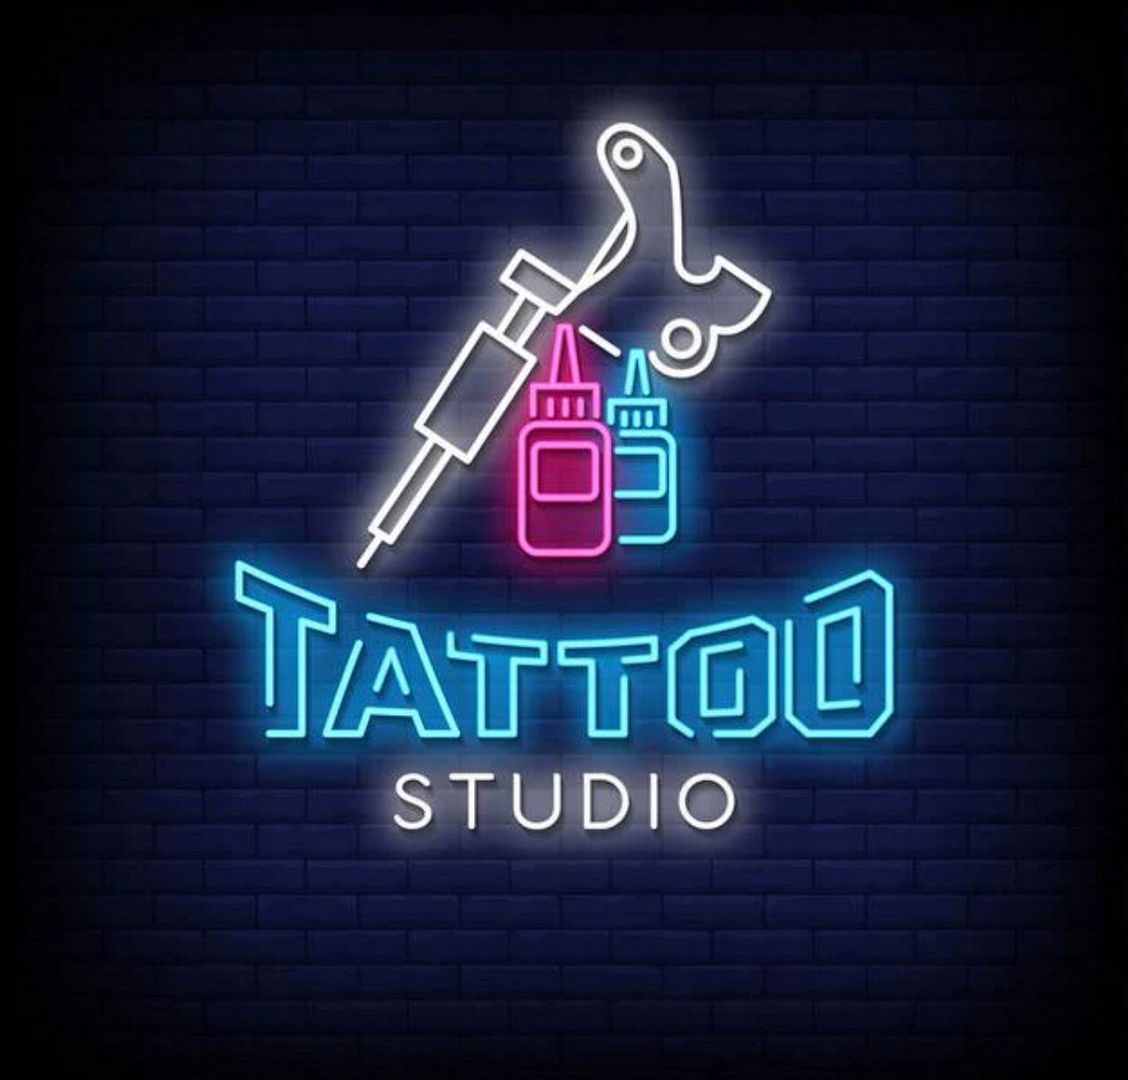 Tattoo Studio Neon Sign